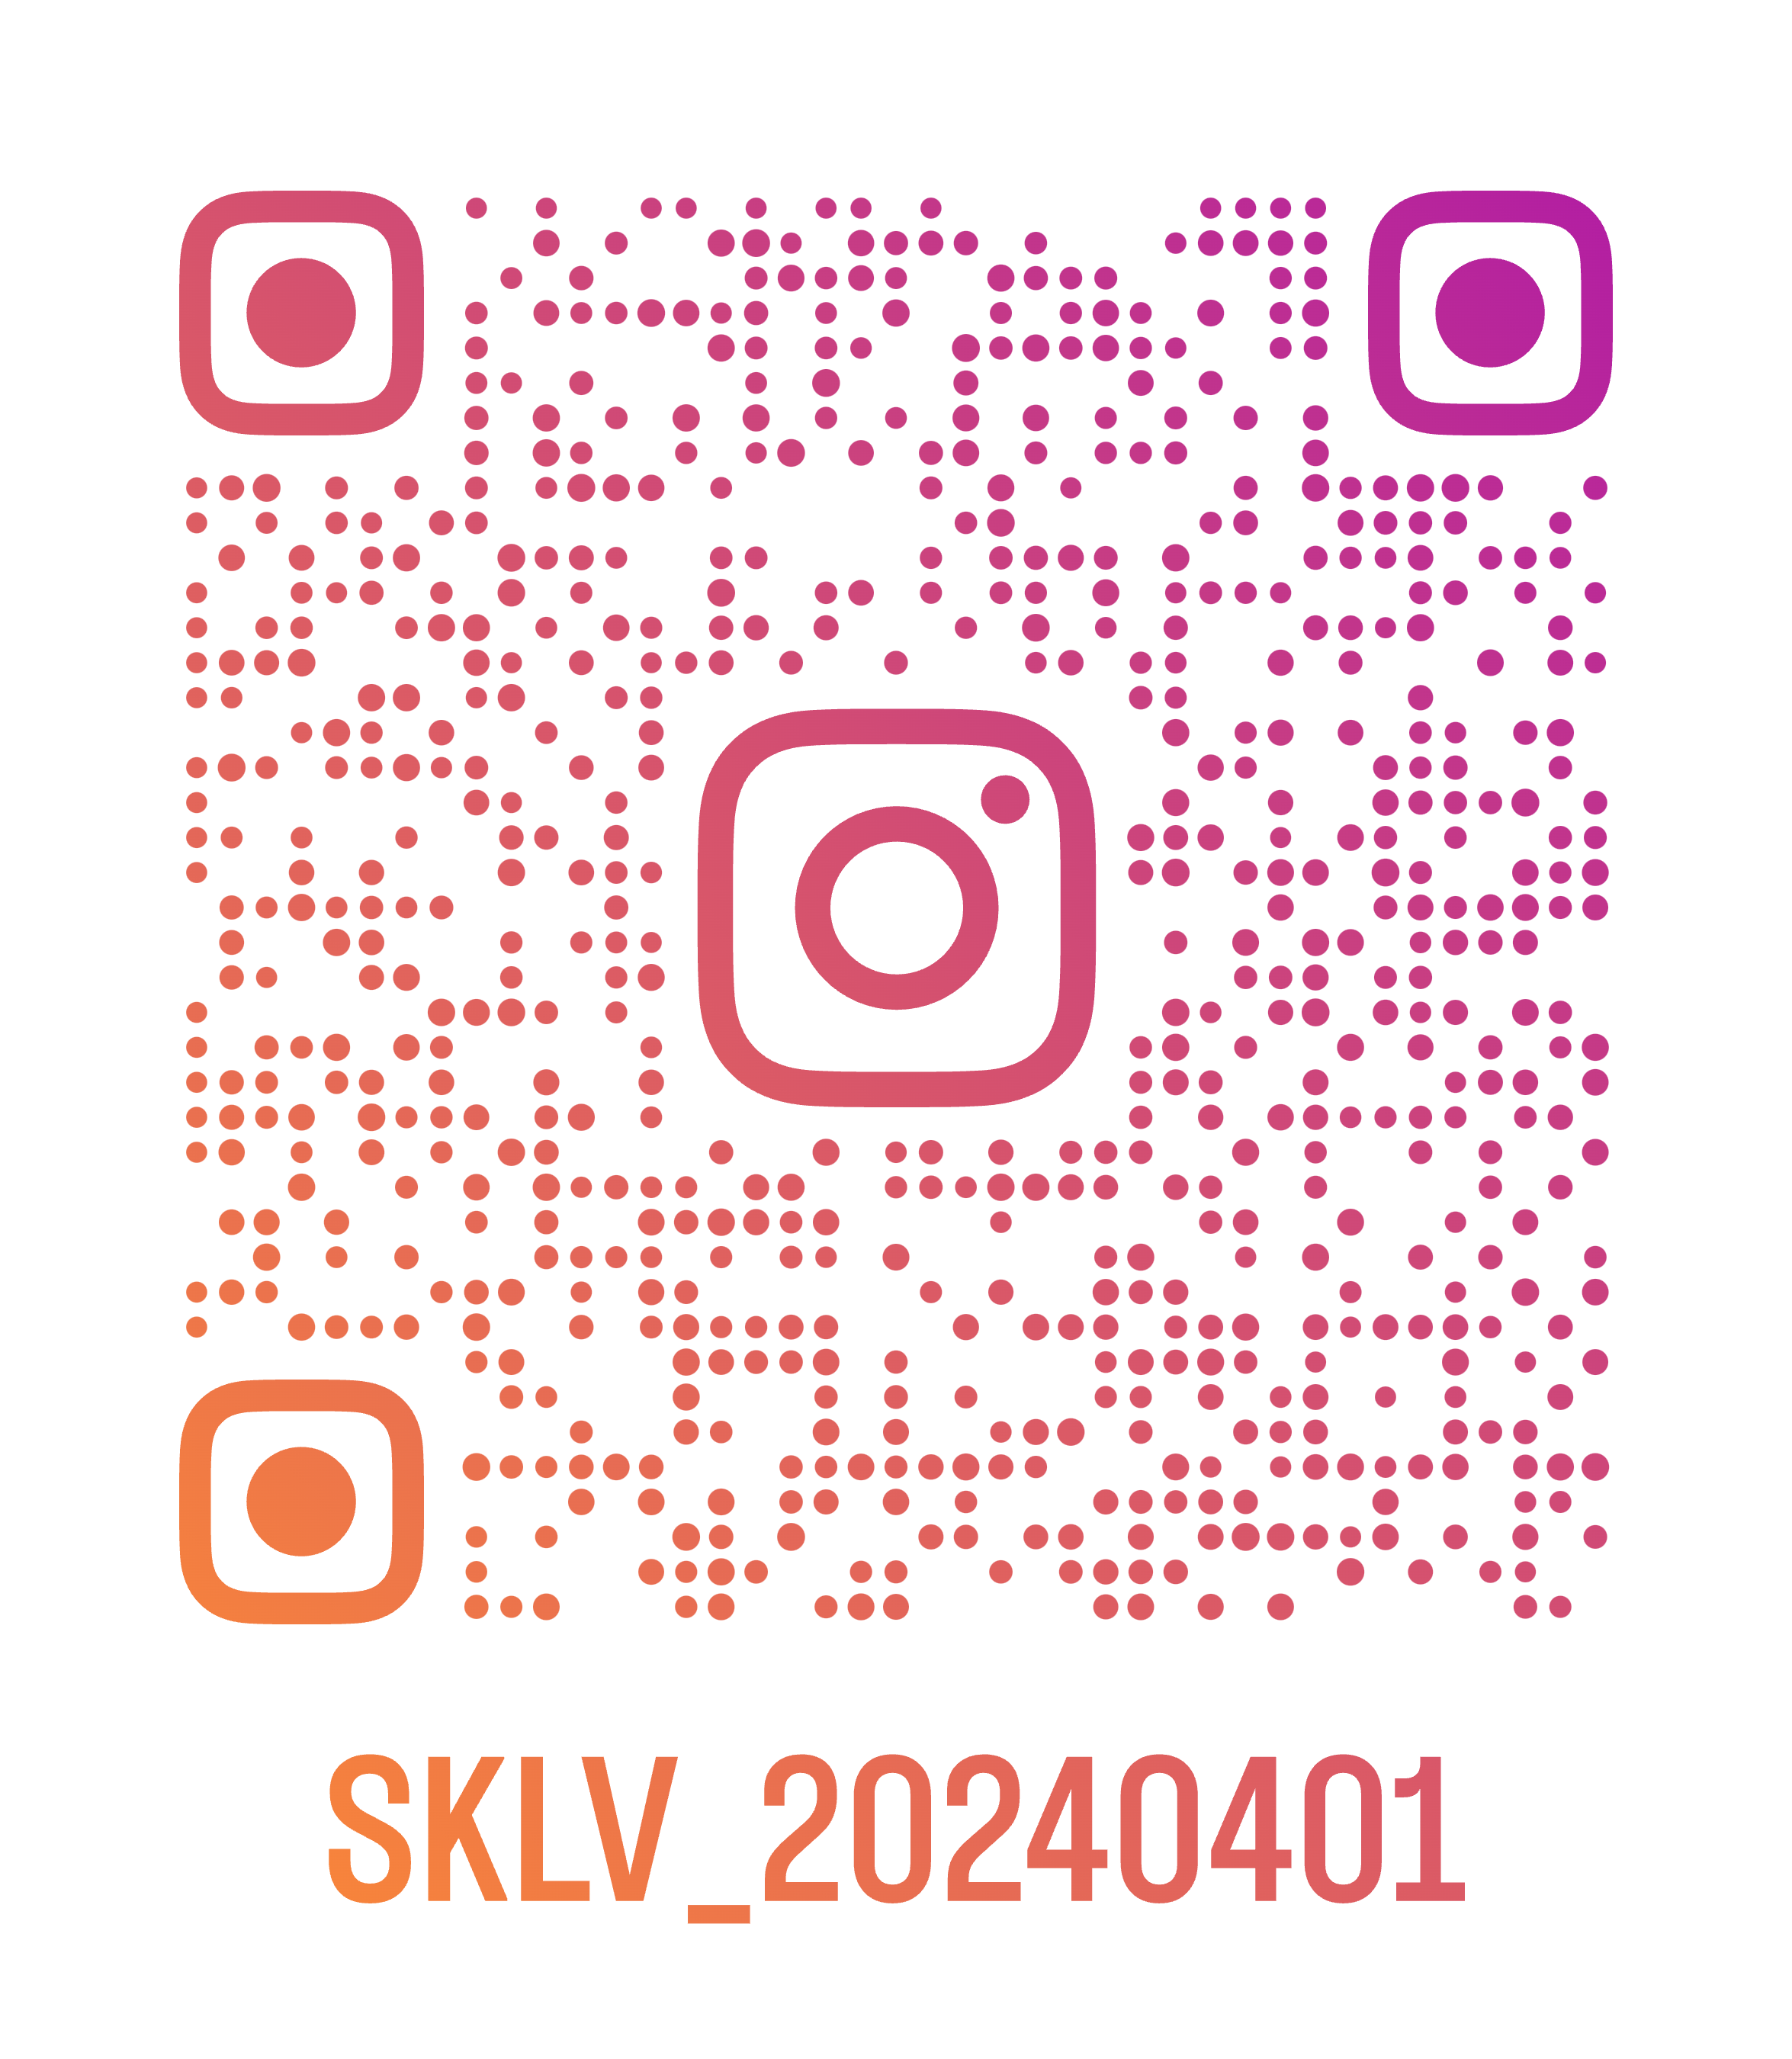 SKLV（南九州畜産獣医学拠点）公式Instagram